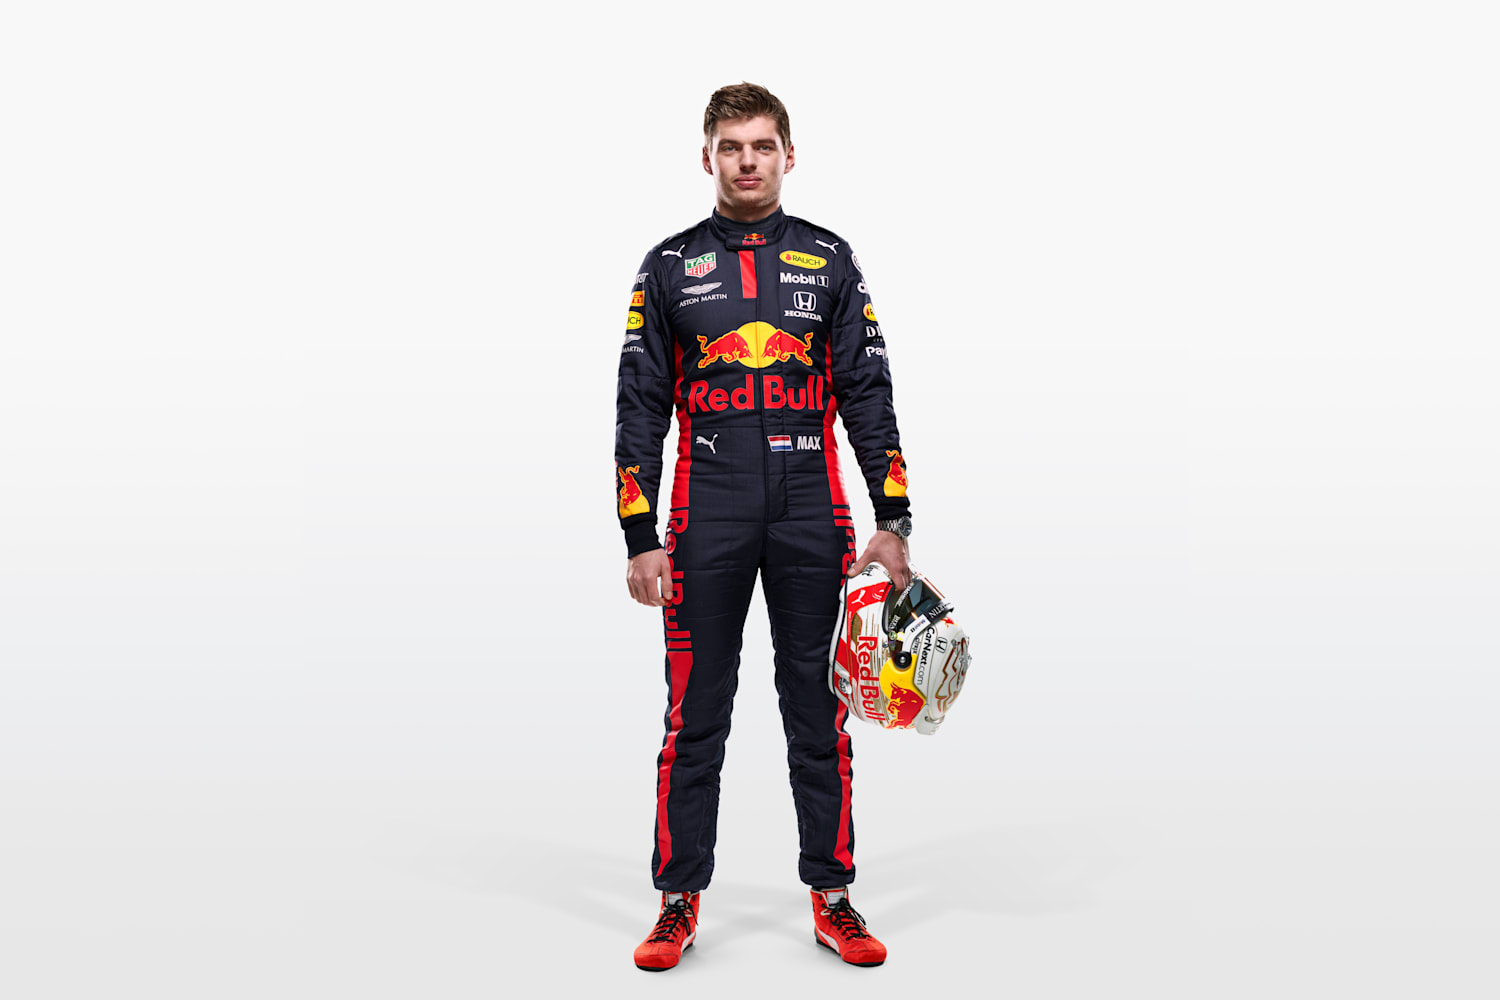 Red Bull Racing: Max Verstappen's 2020 helmet reveal